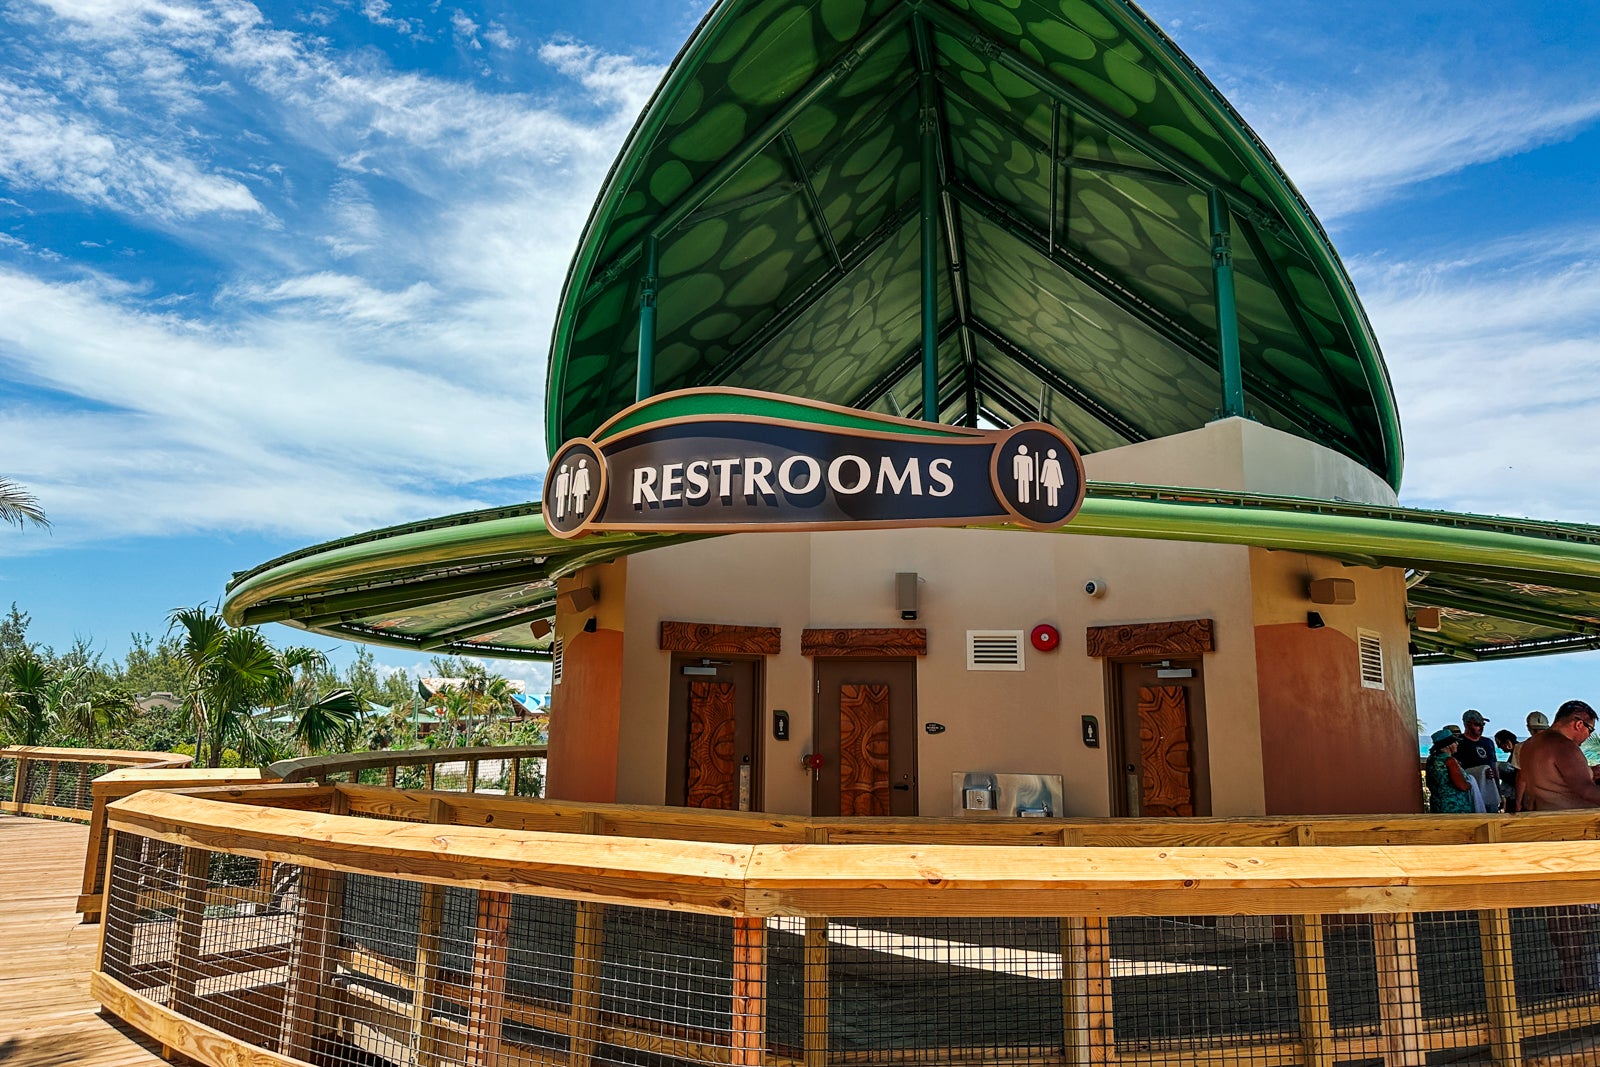 A Bahamian-themed restroom building